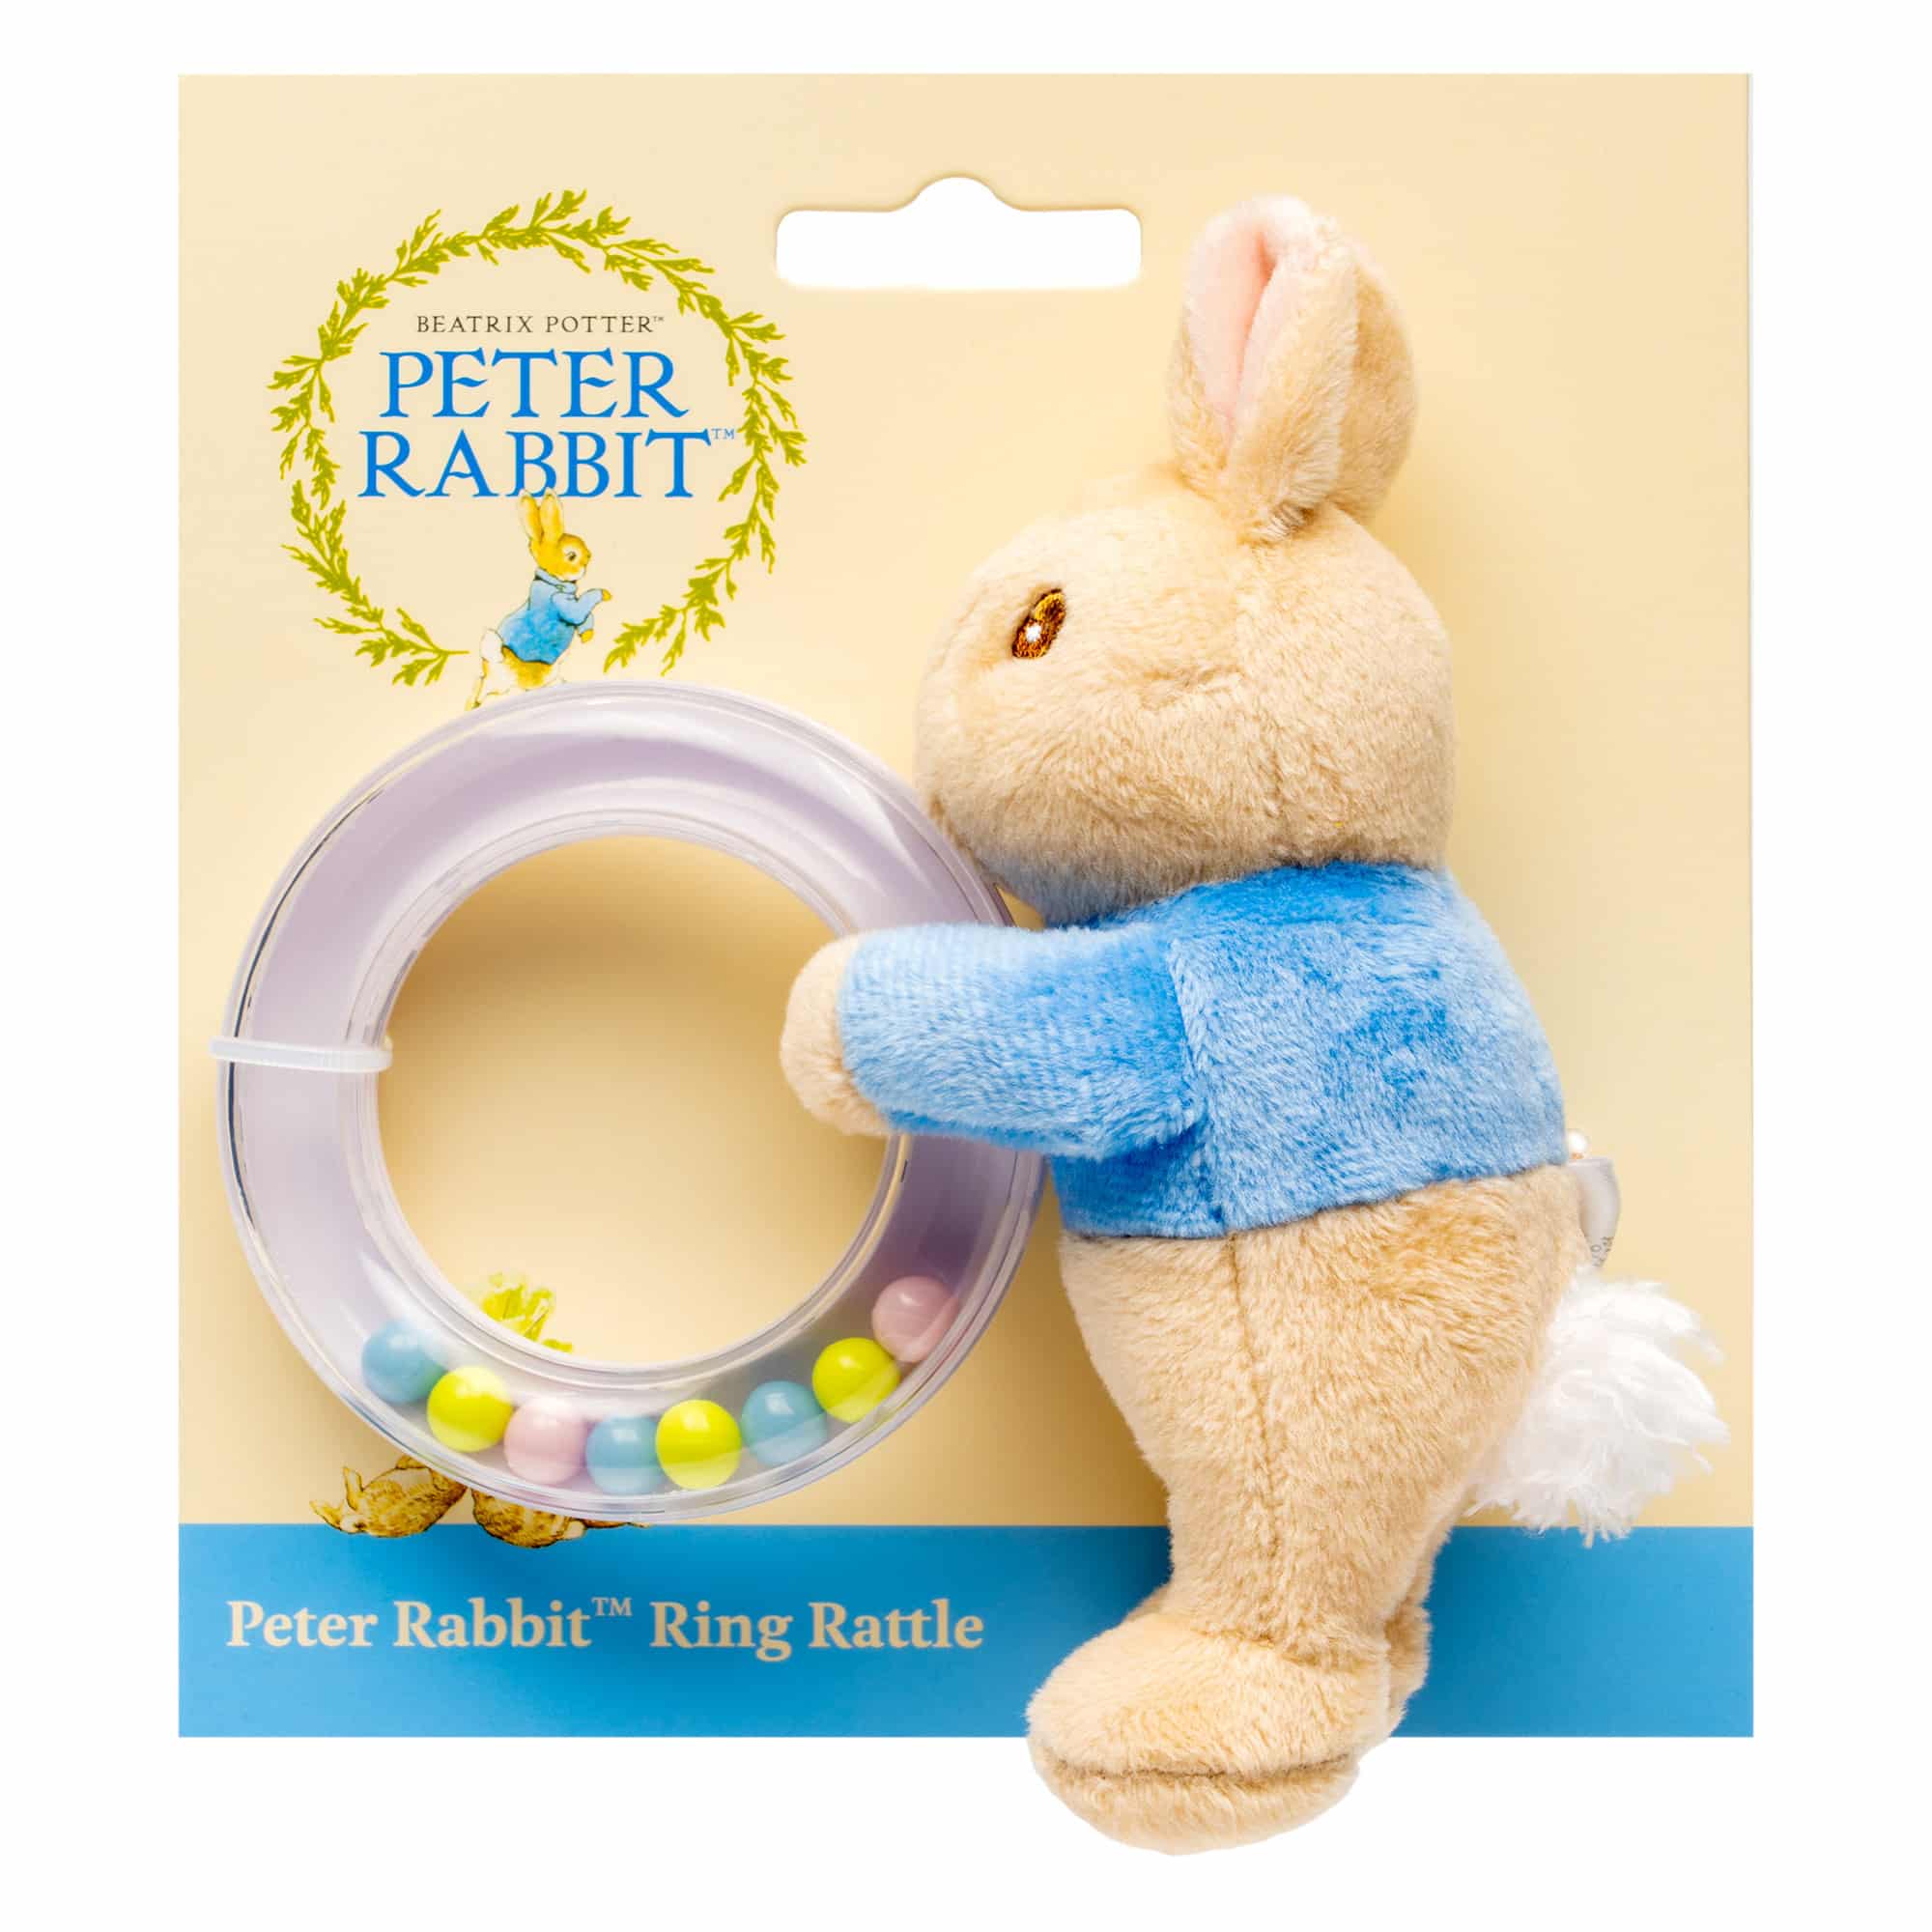 Peter Rabbit - Peter Rabbit Ring Rattle